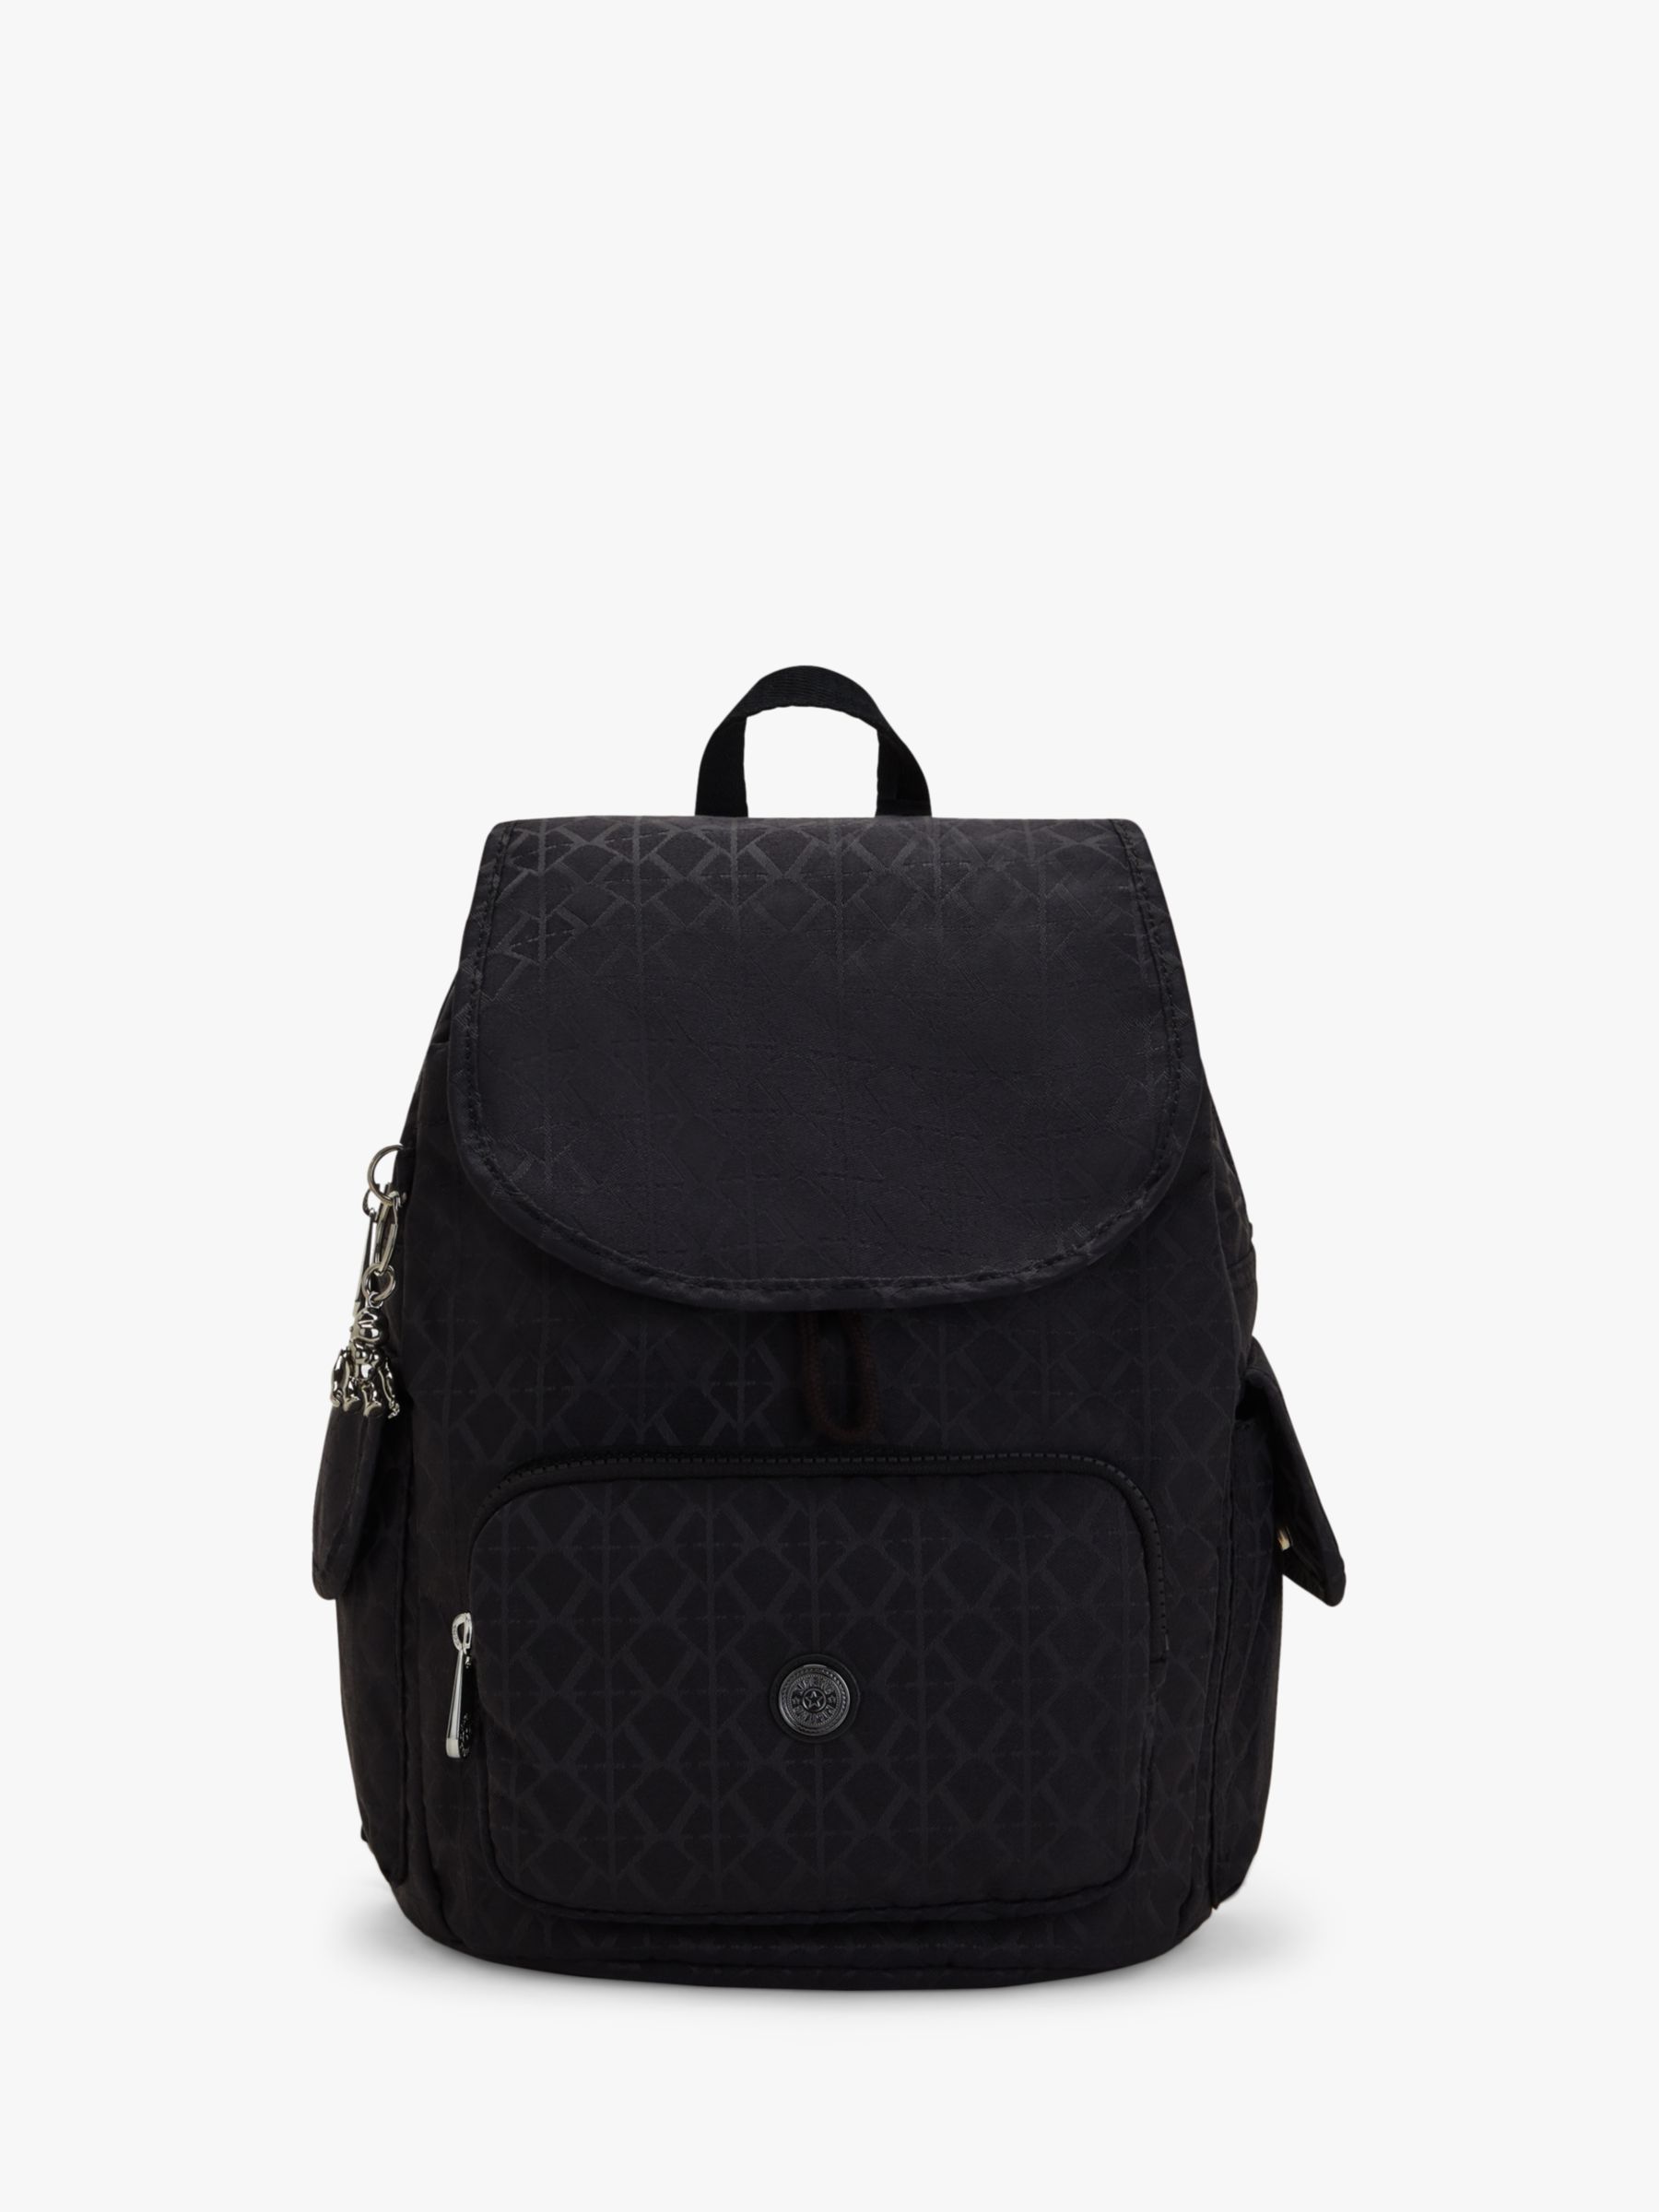 Kipling City Pack Small Backpack, Black at John Lewis & Partners